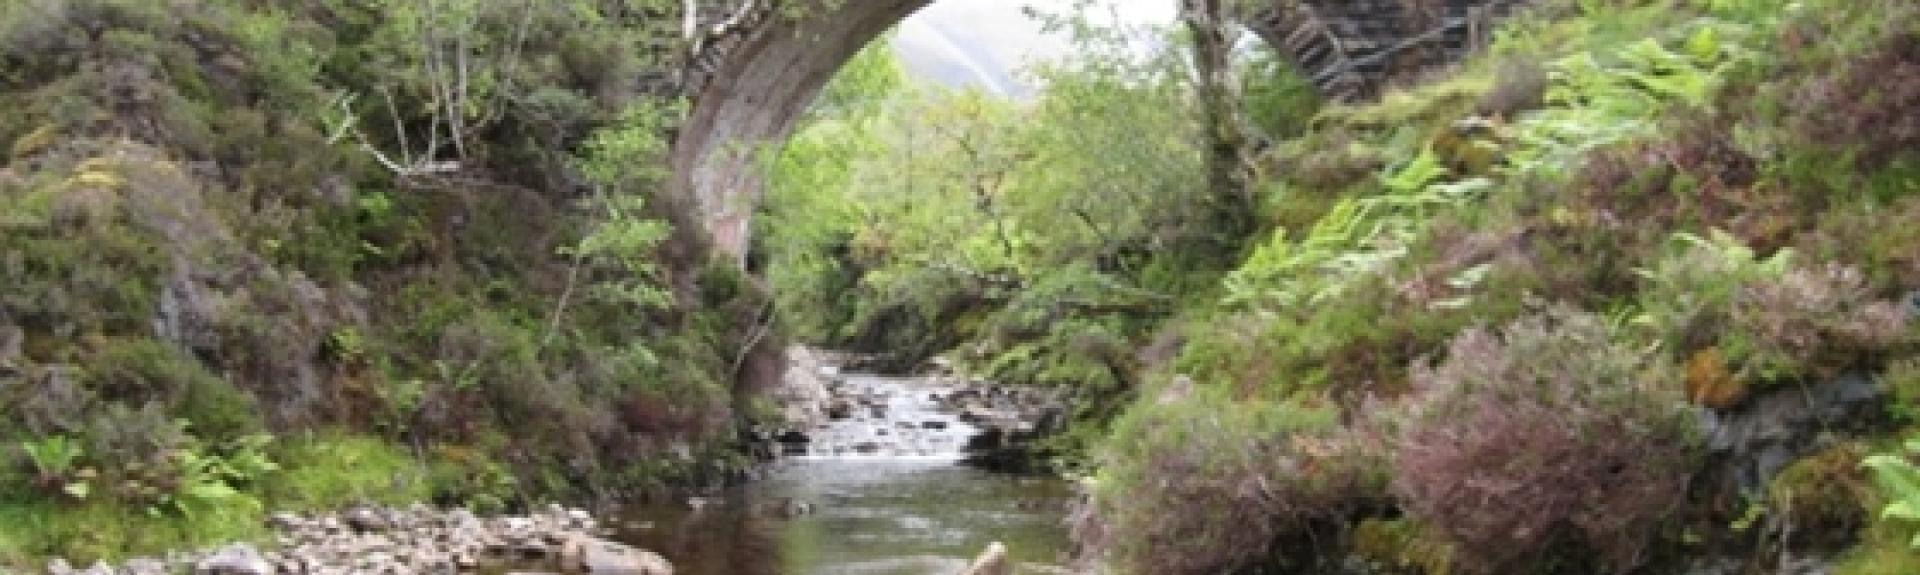 A high stone arched bridge spans a mountain stream.